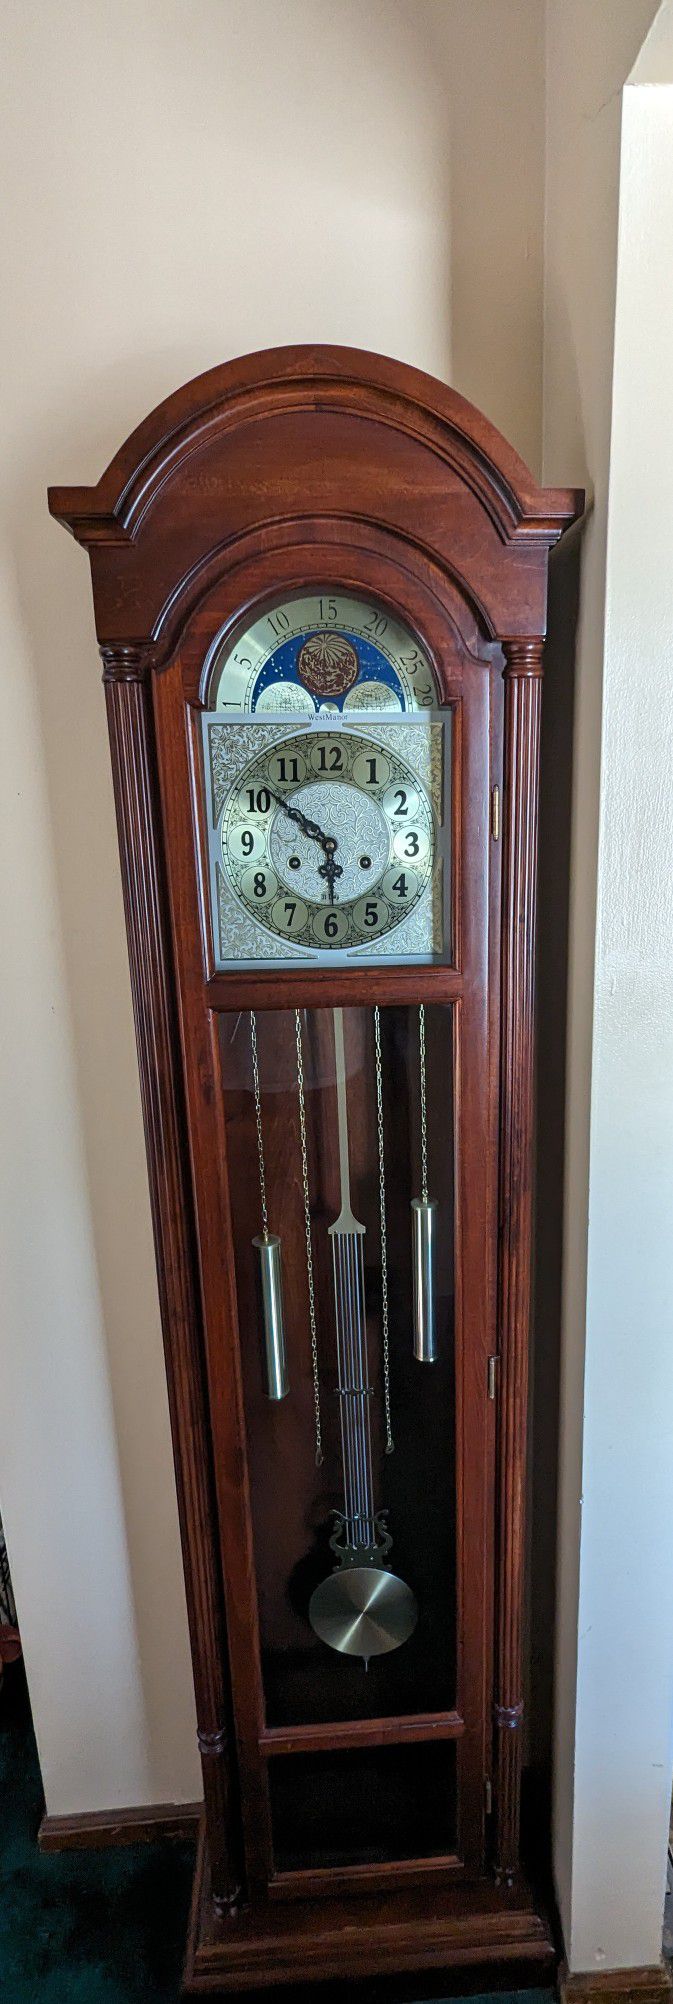 WestManor Grandfather clock 